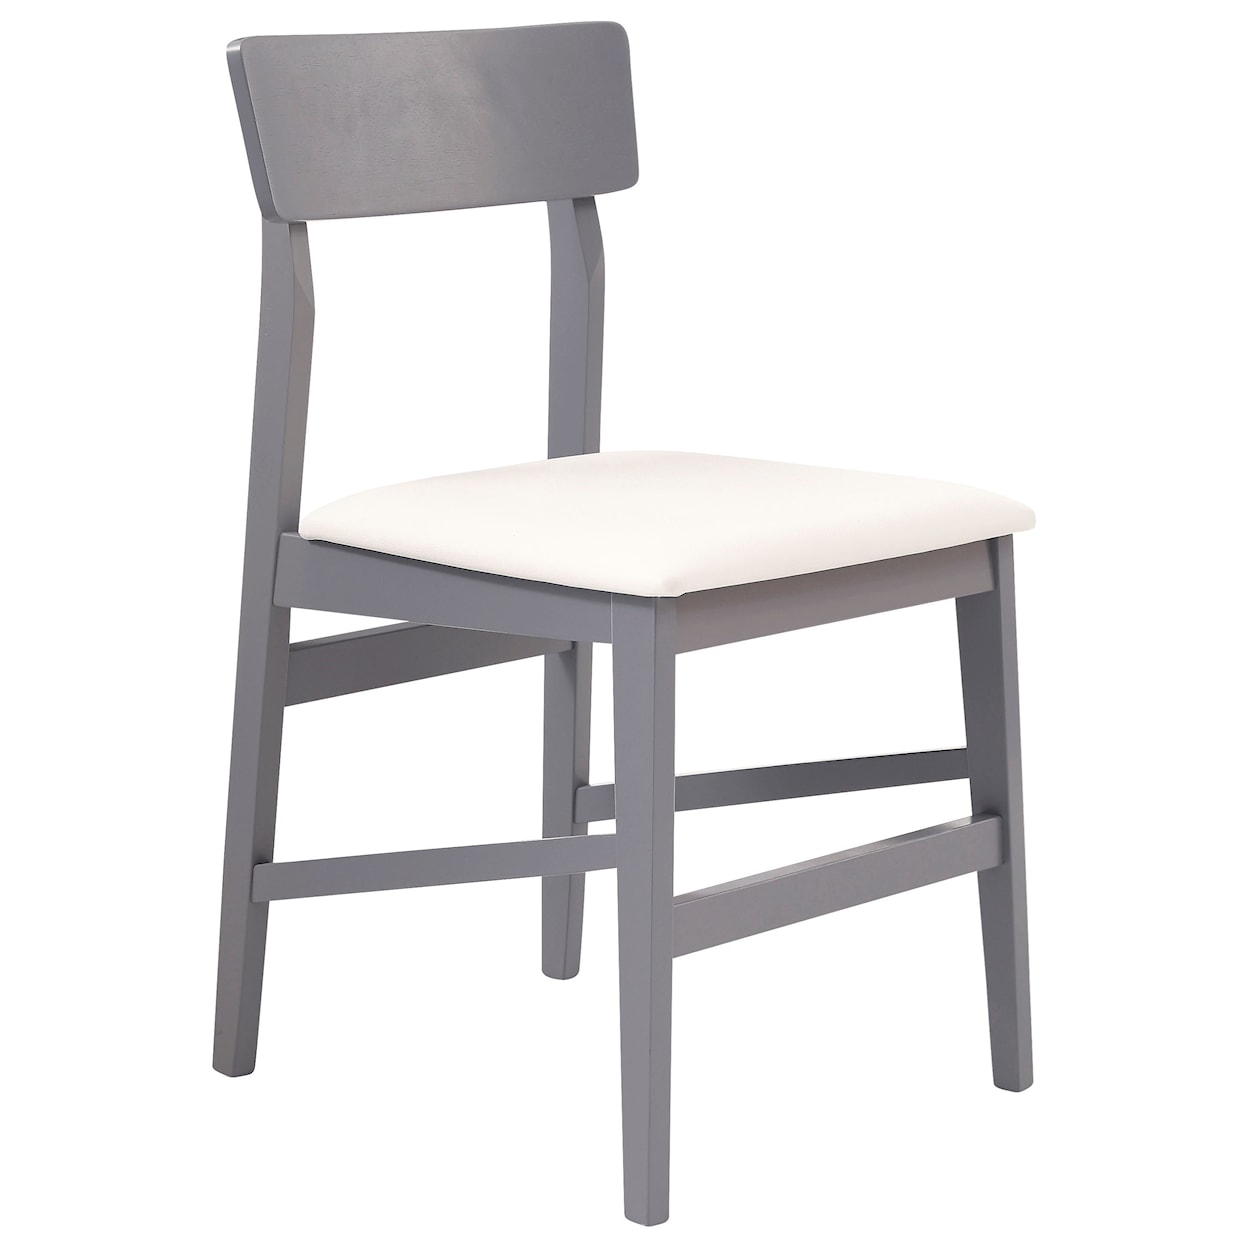 Progressive Furniture Nori Dining Table W/4 Chairs